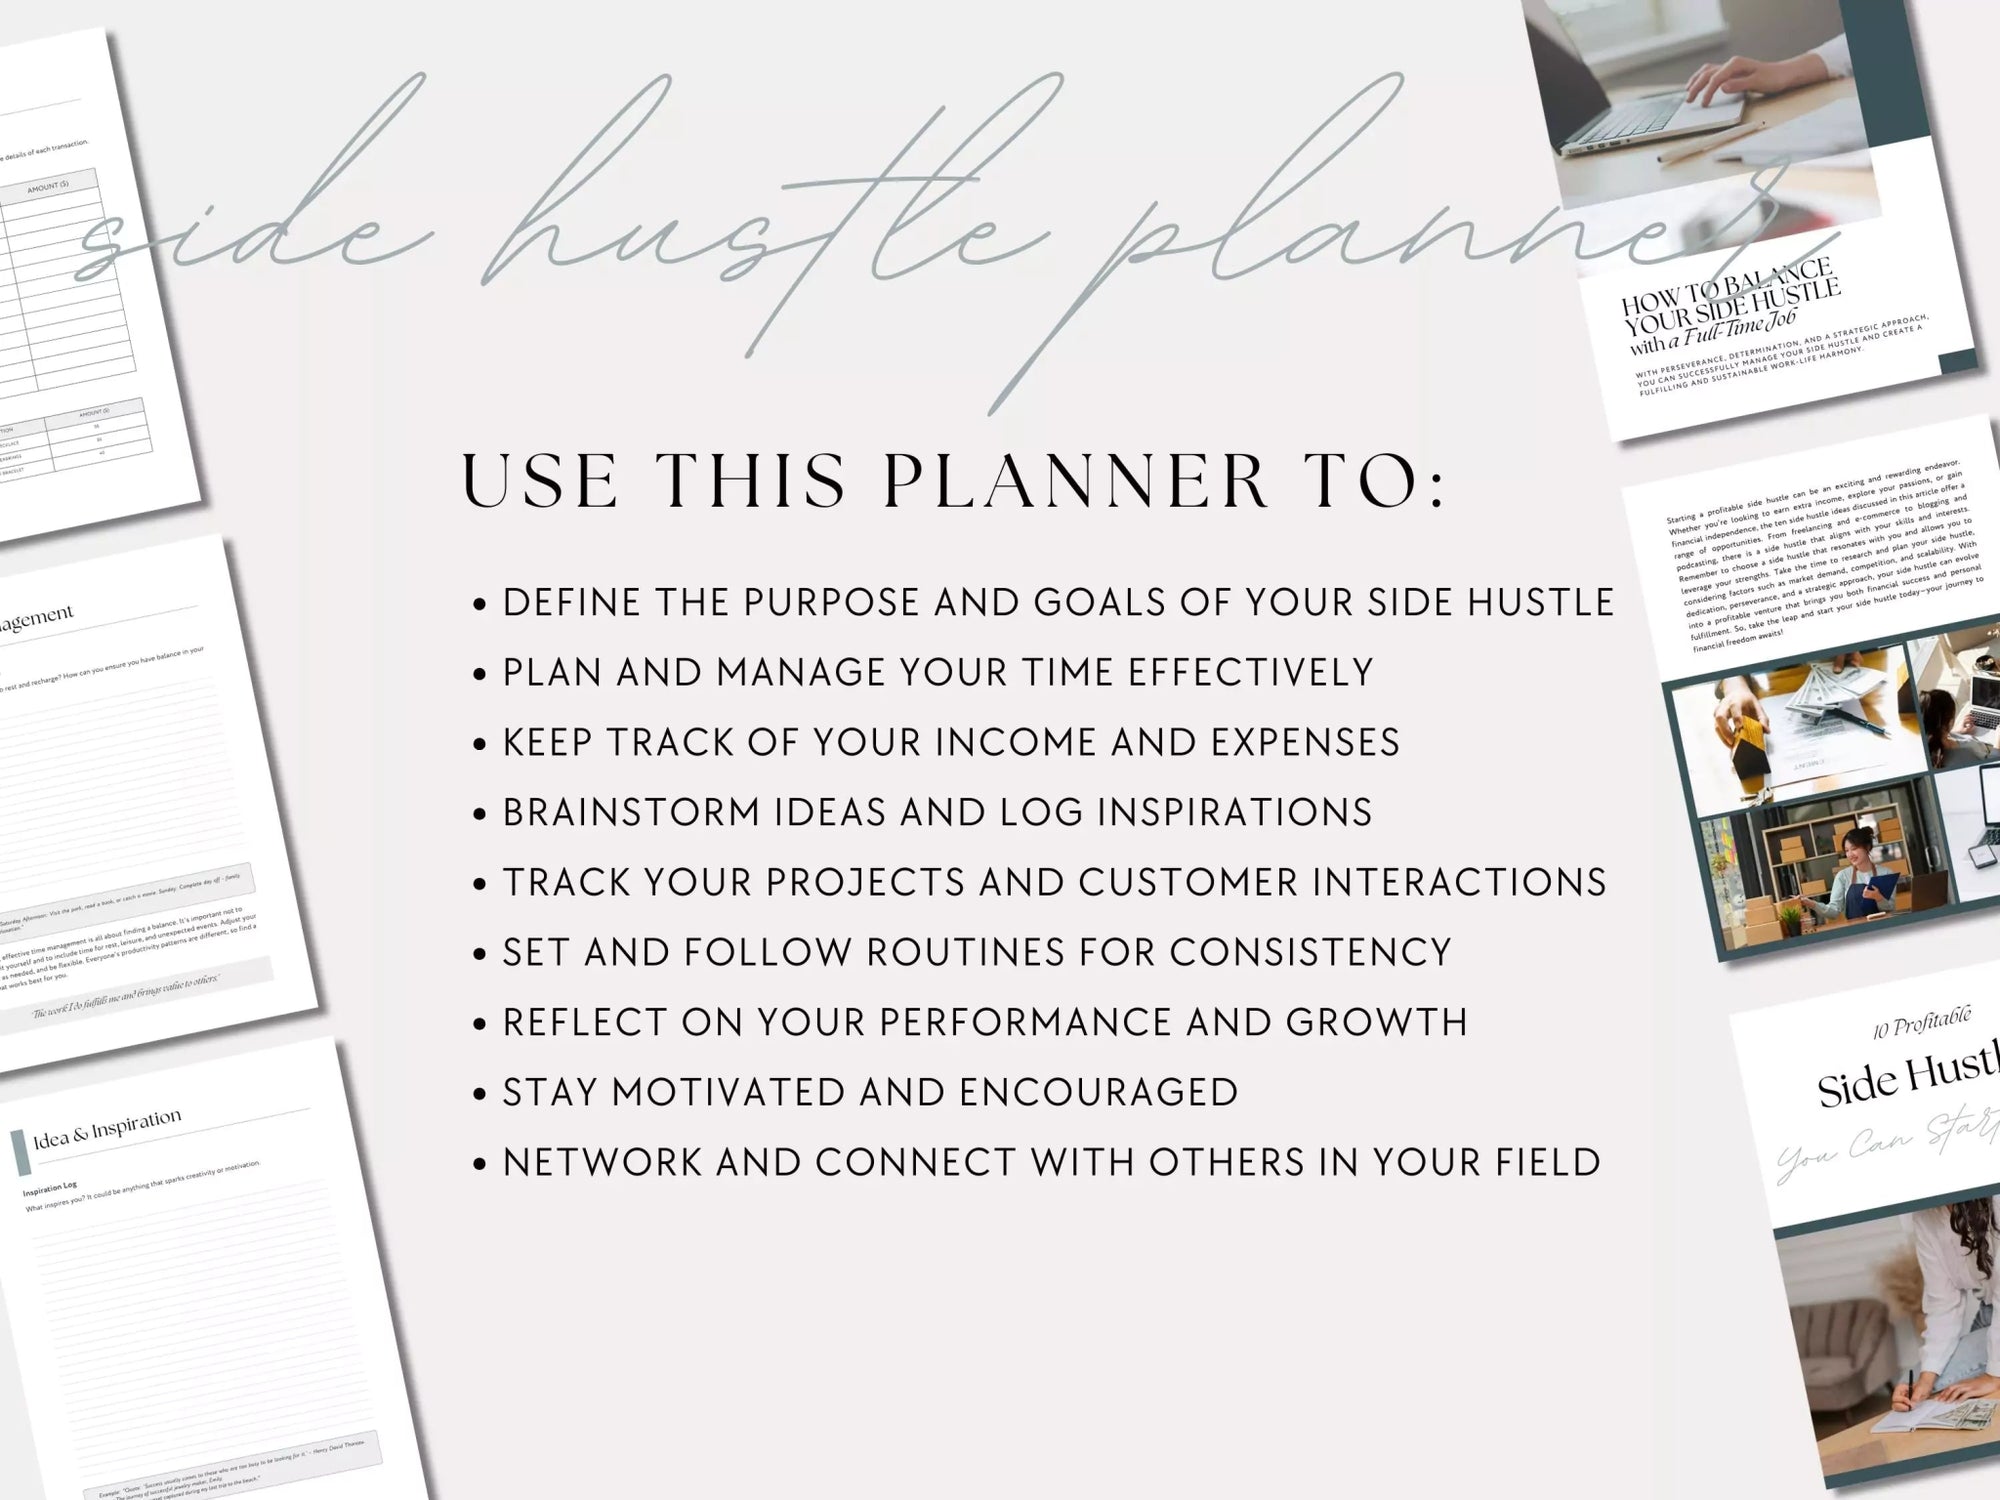 Side Hustle Workbook &amp; Planner - Printable Business Planner, Passive Income Workbook - Trendy Fox Studio